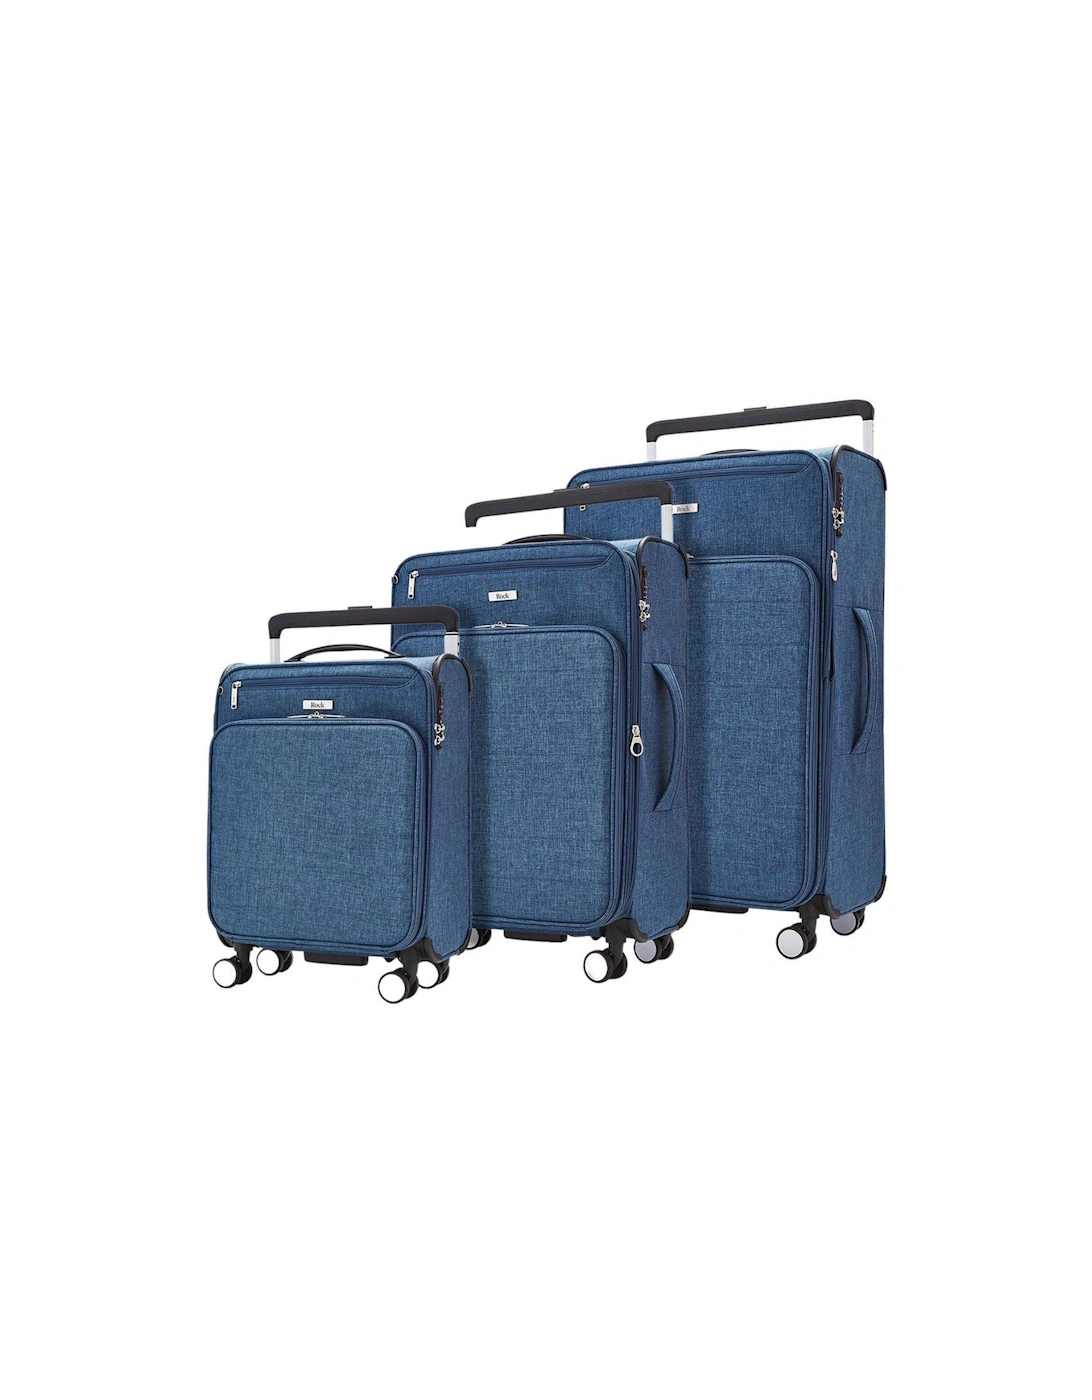 Rocklite DLX 3 Piece Set 8 Wheel Soft Unique Lightweight Large Suitcase - Denim Blue, 2 of 1